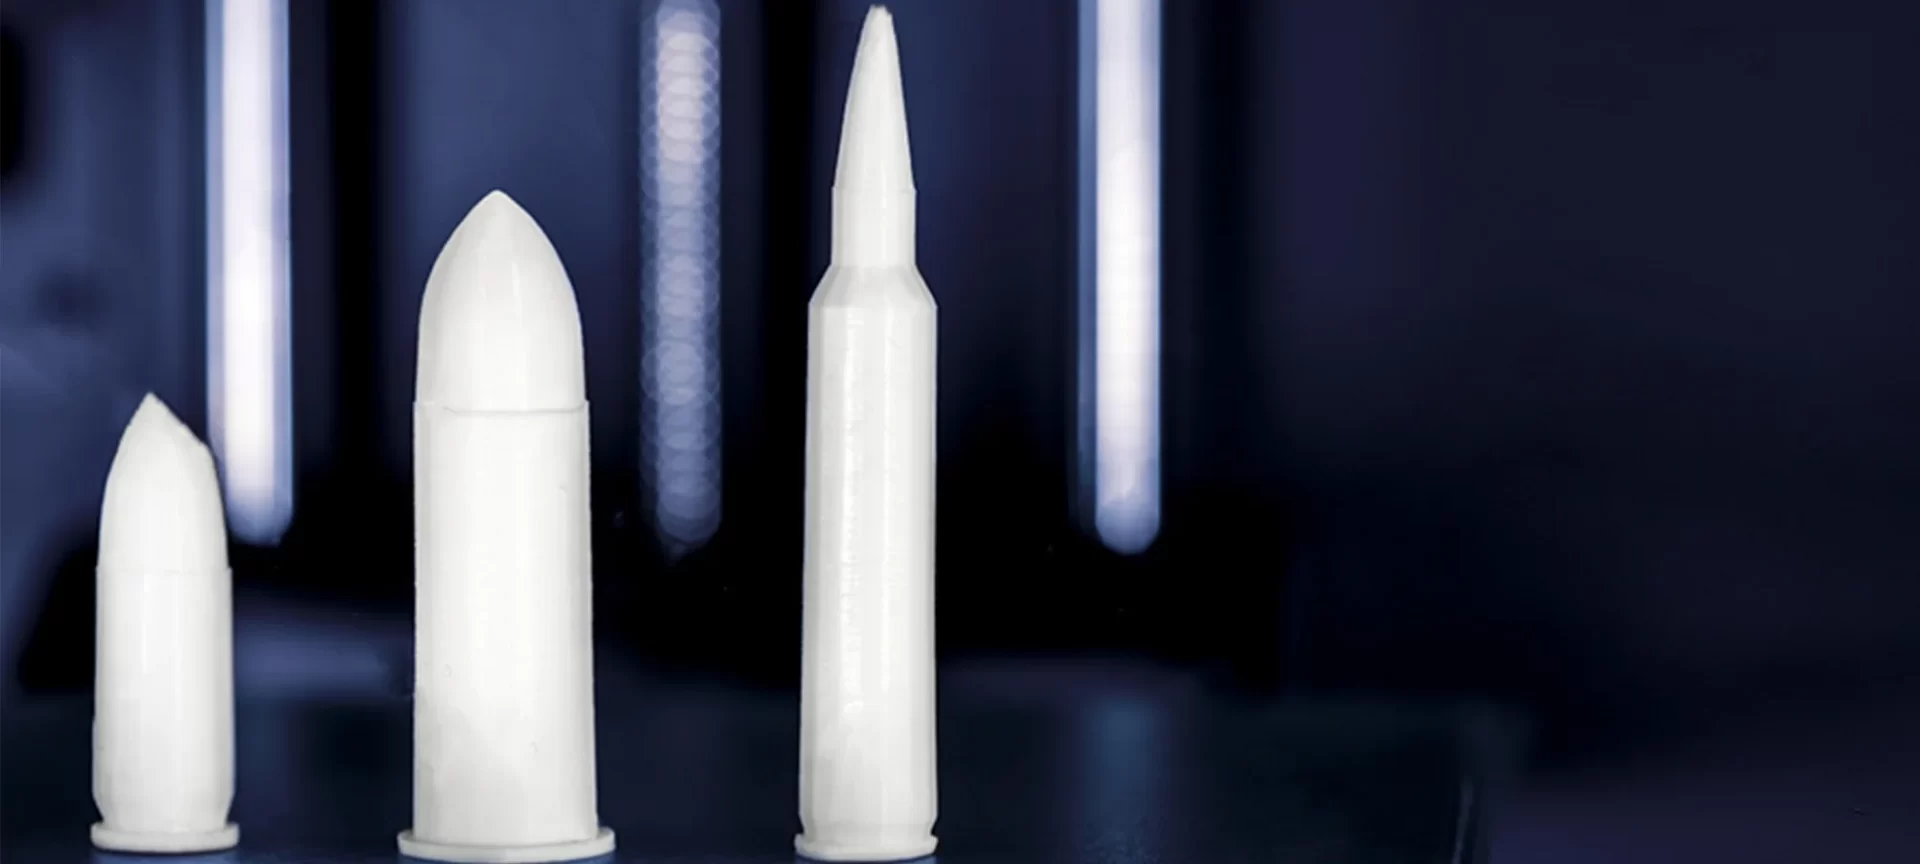 3D printed bullets